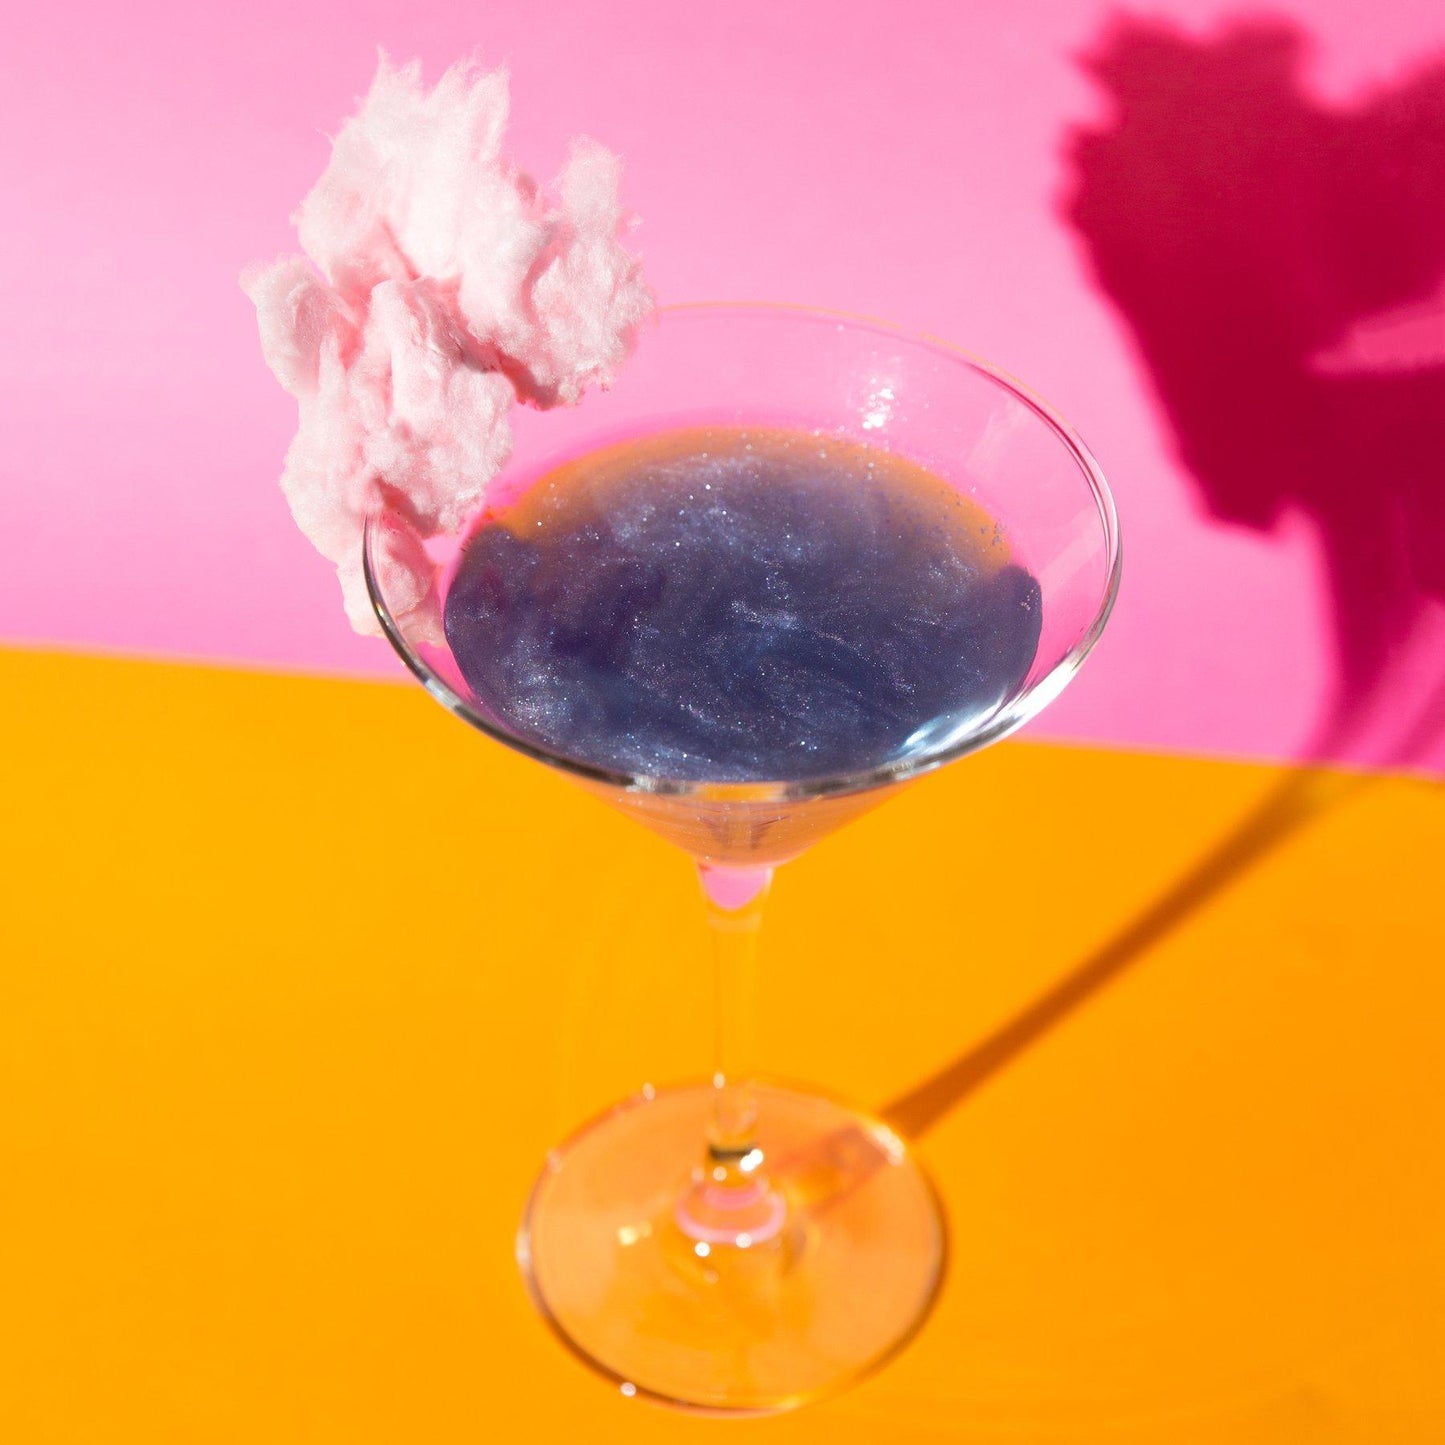 Sugar Mama Shimmer Drink Glitter - Violet Vibes